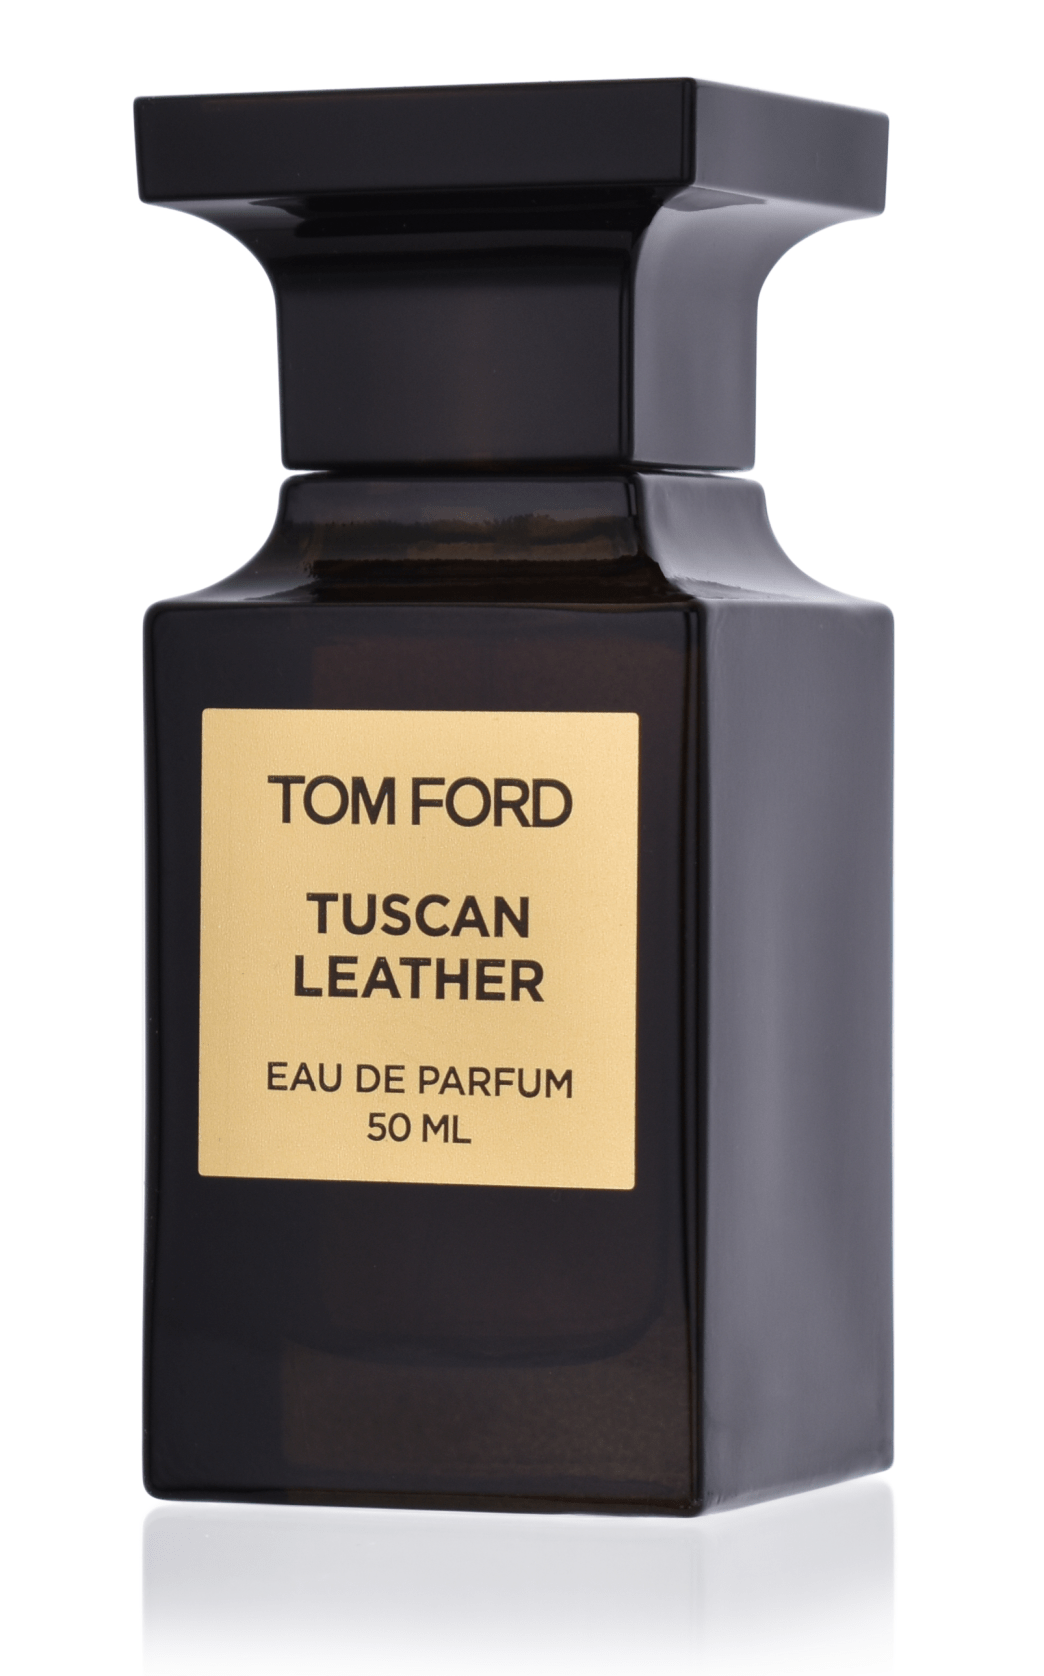 Tom Ford Tuscan Leather 5 ml Eau de Parfum Abfüllung